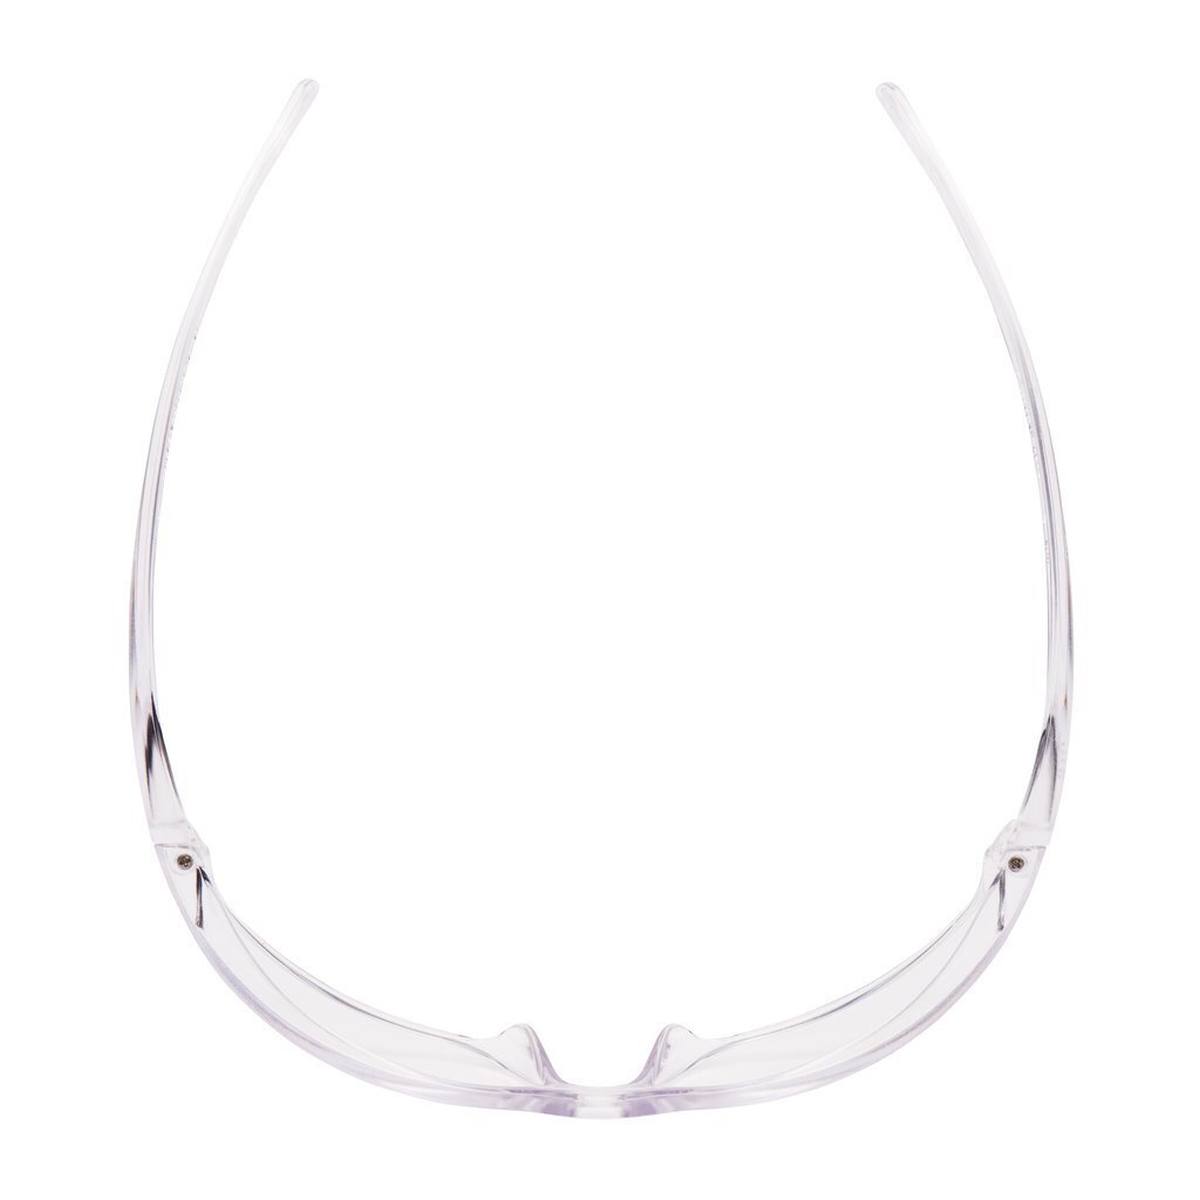 3M Virtua AF safety spectacles, anti-scratch/anti-fog coating, yellow lens, 715003AF